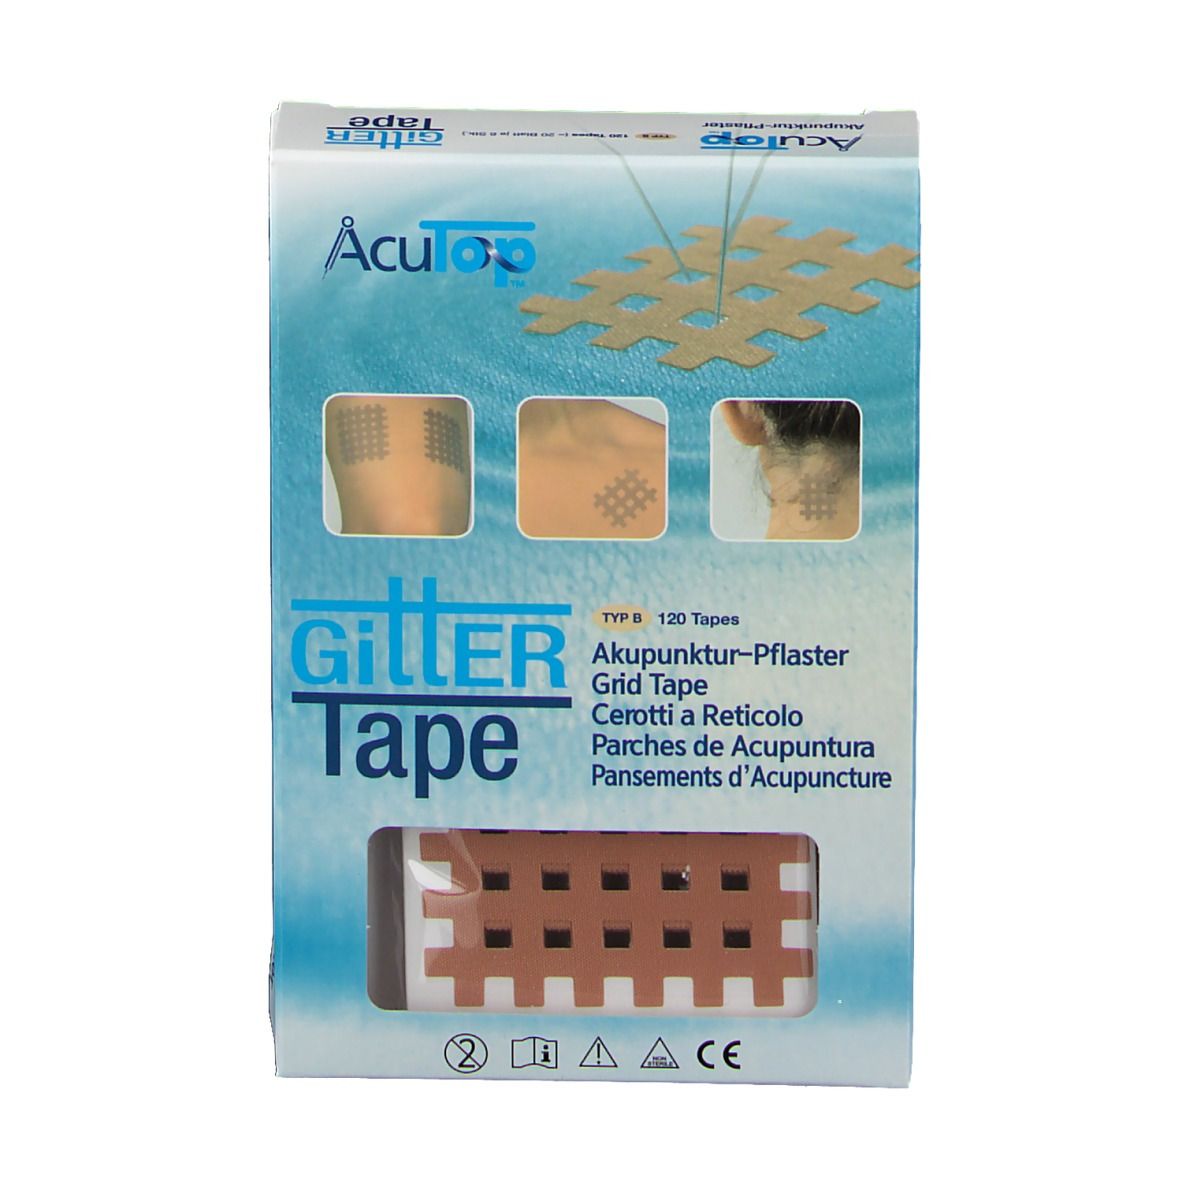 Akupunktur-Pflaster AcuTop Gitter Tape Mix Set